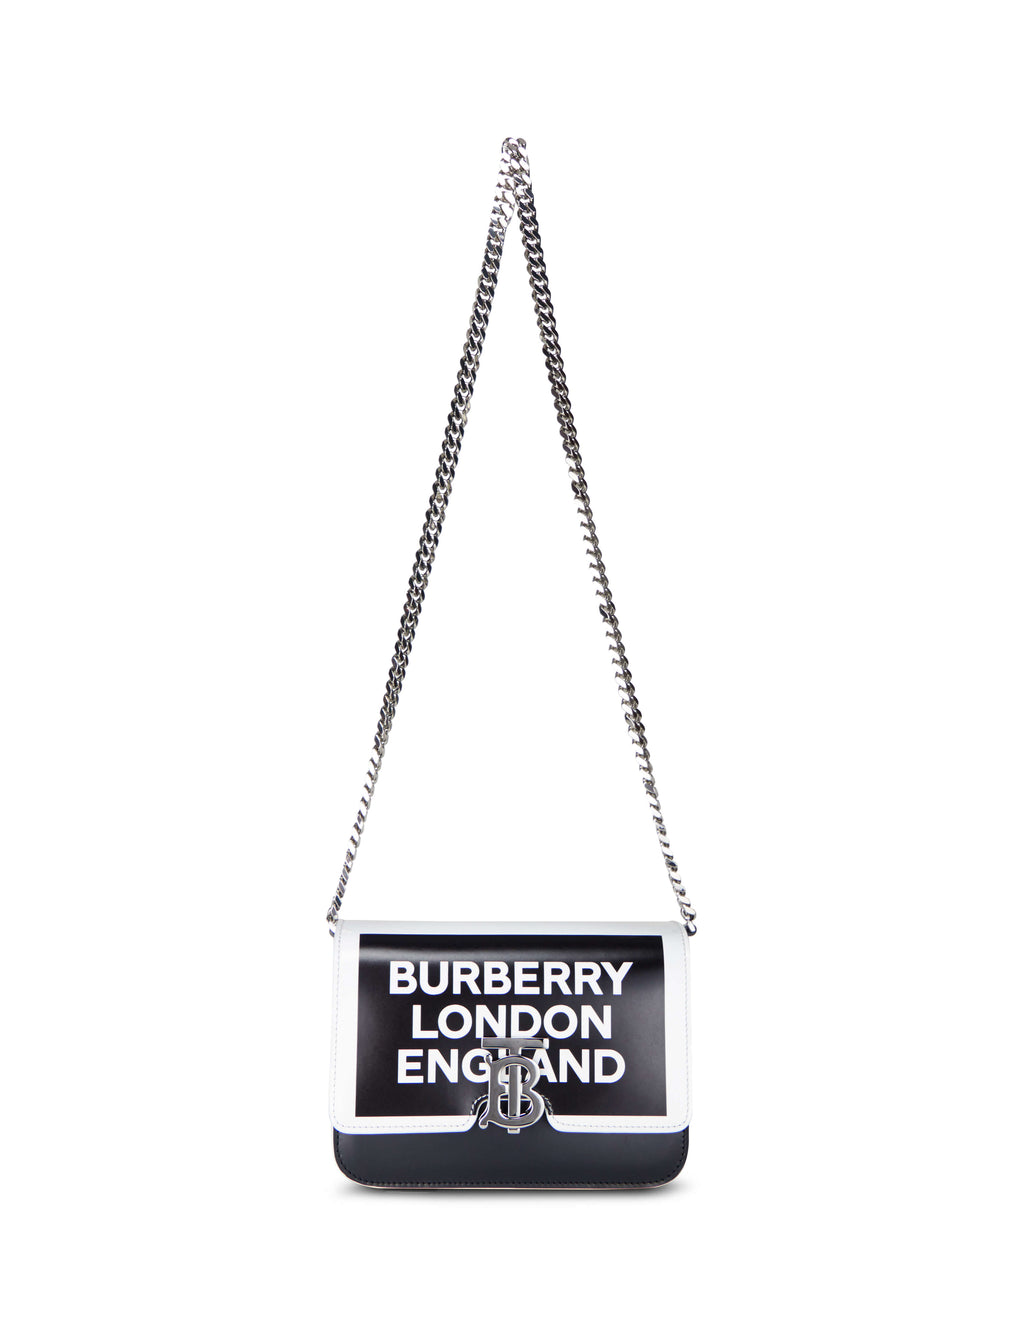 burberry purses silver